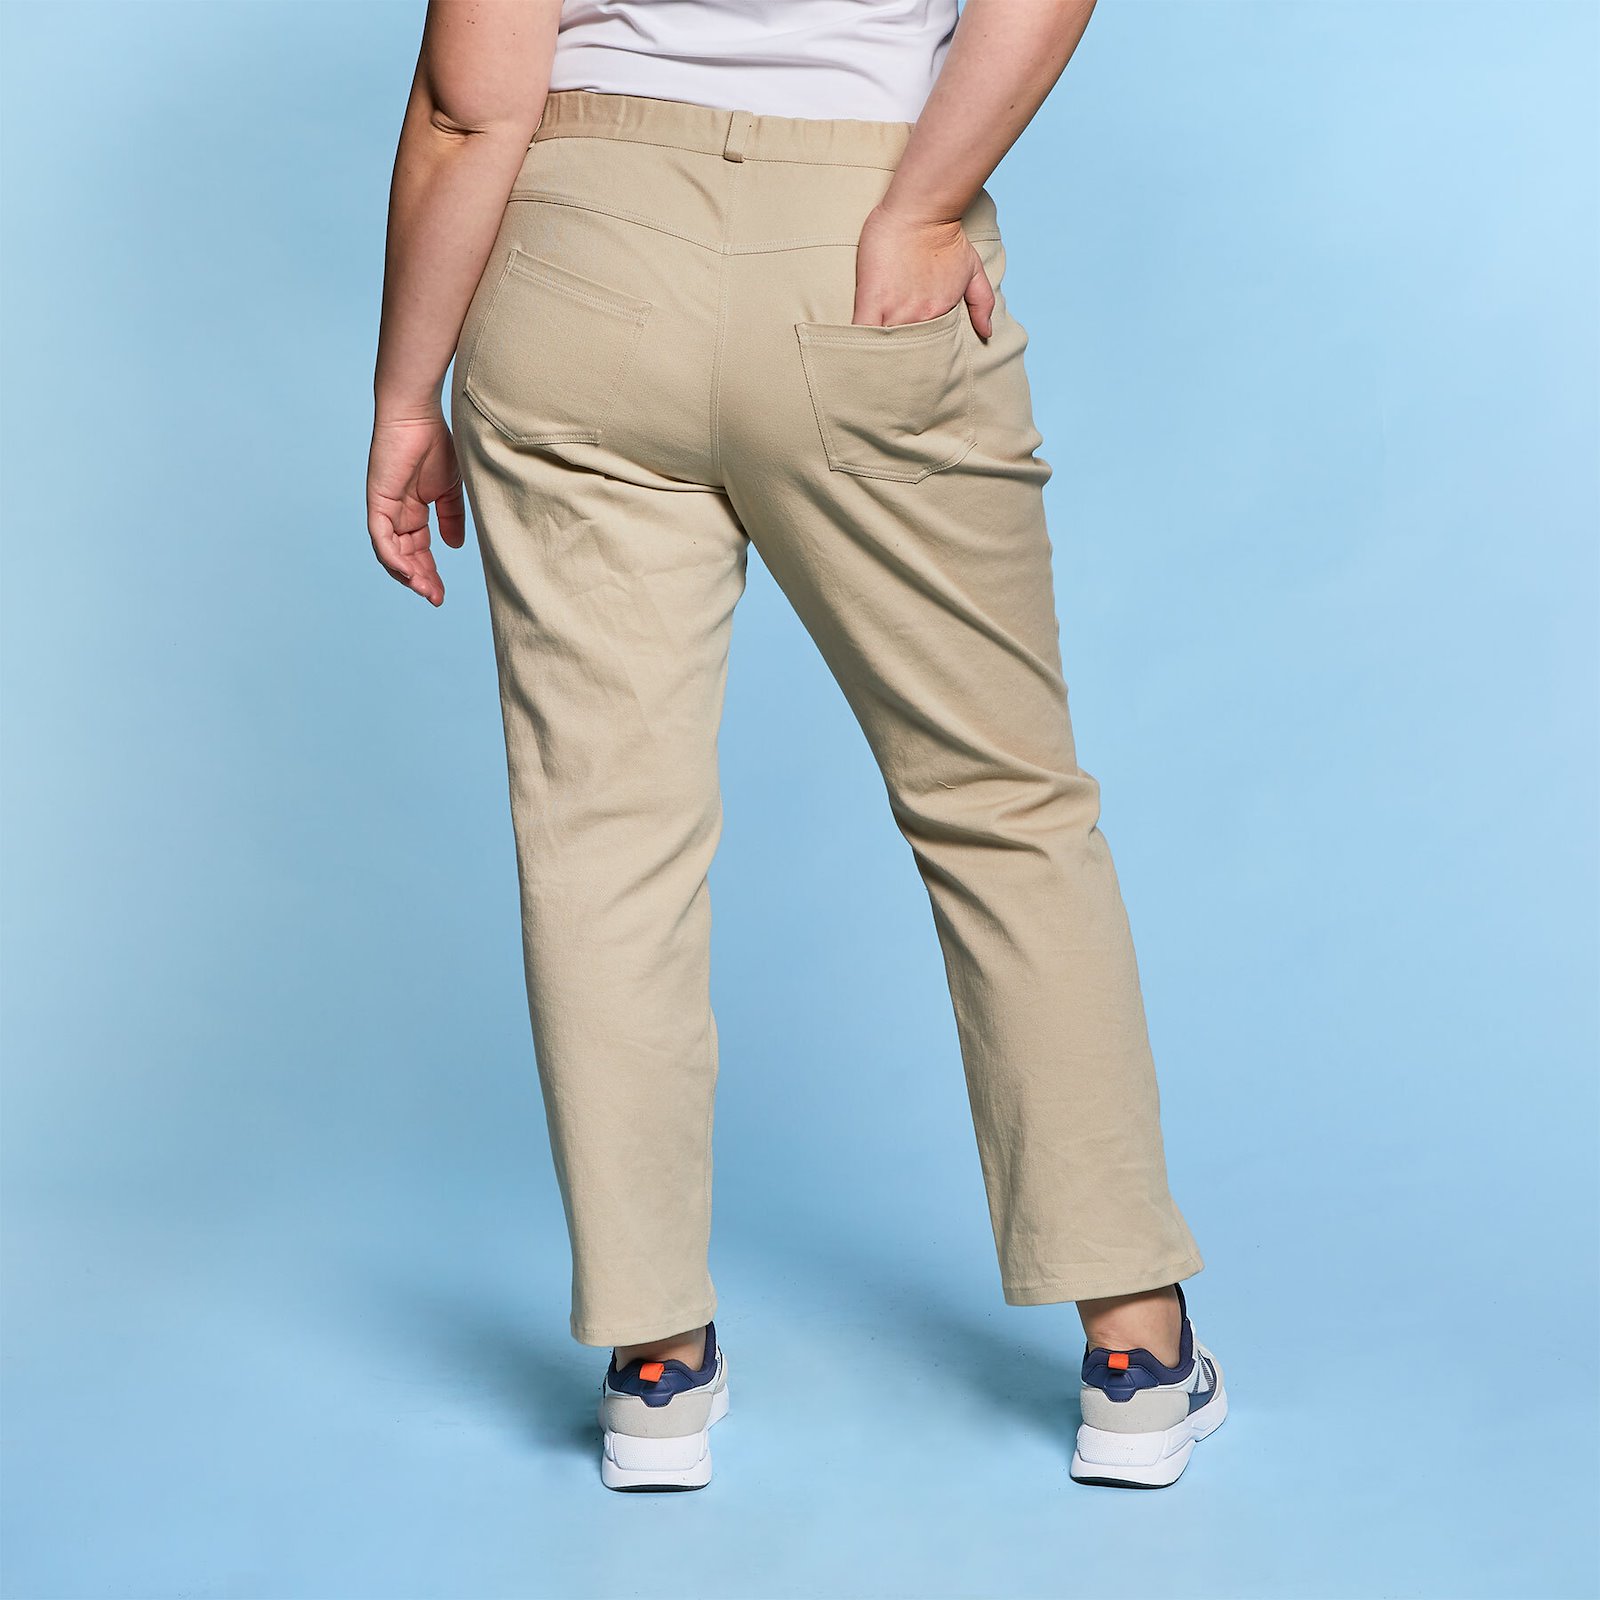 Classic jeans w. elastic waistband back 18-32 p70007000_p70007001_p70007002_p70007003_p70007004_pack_e